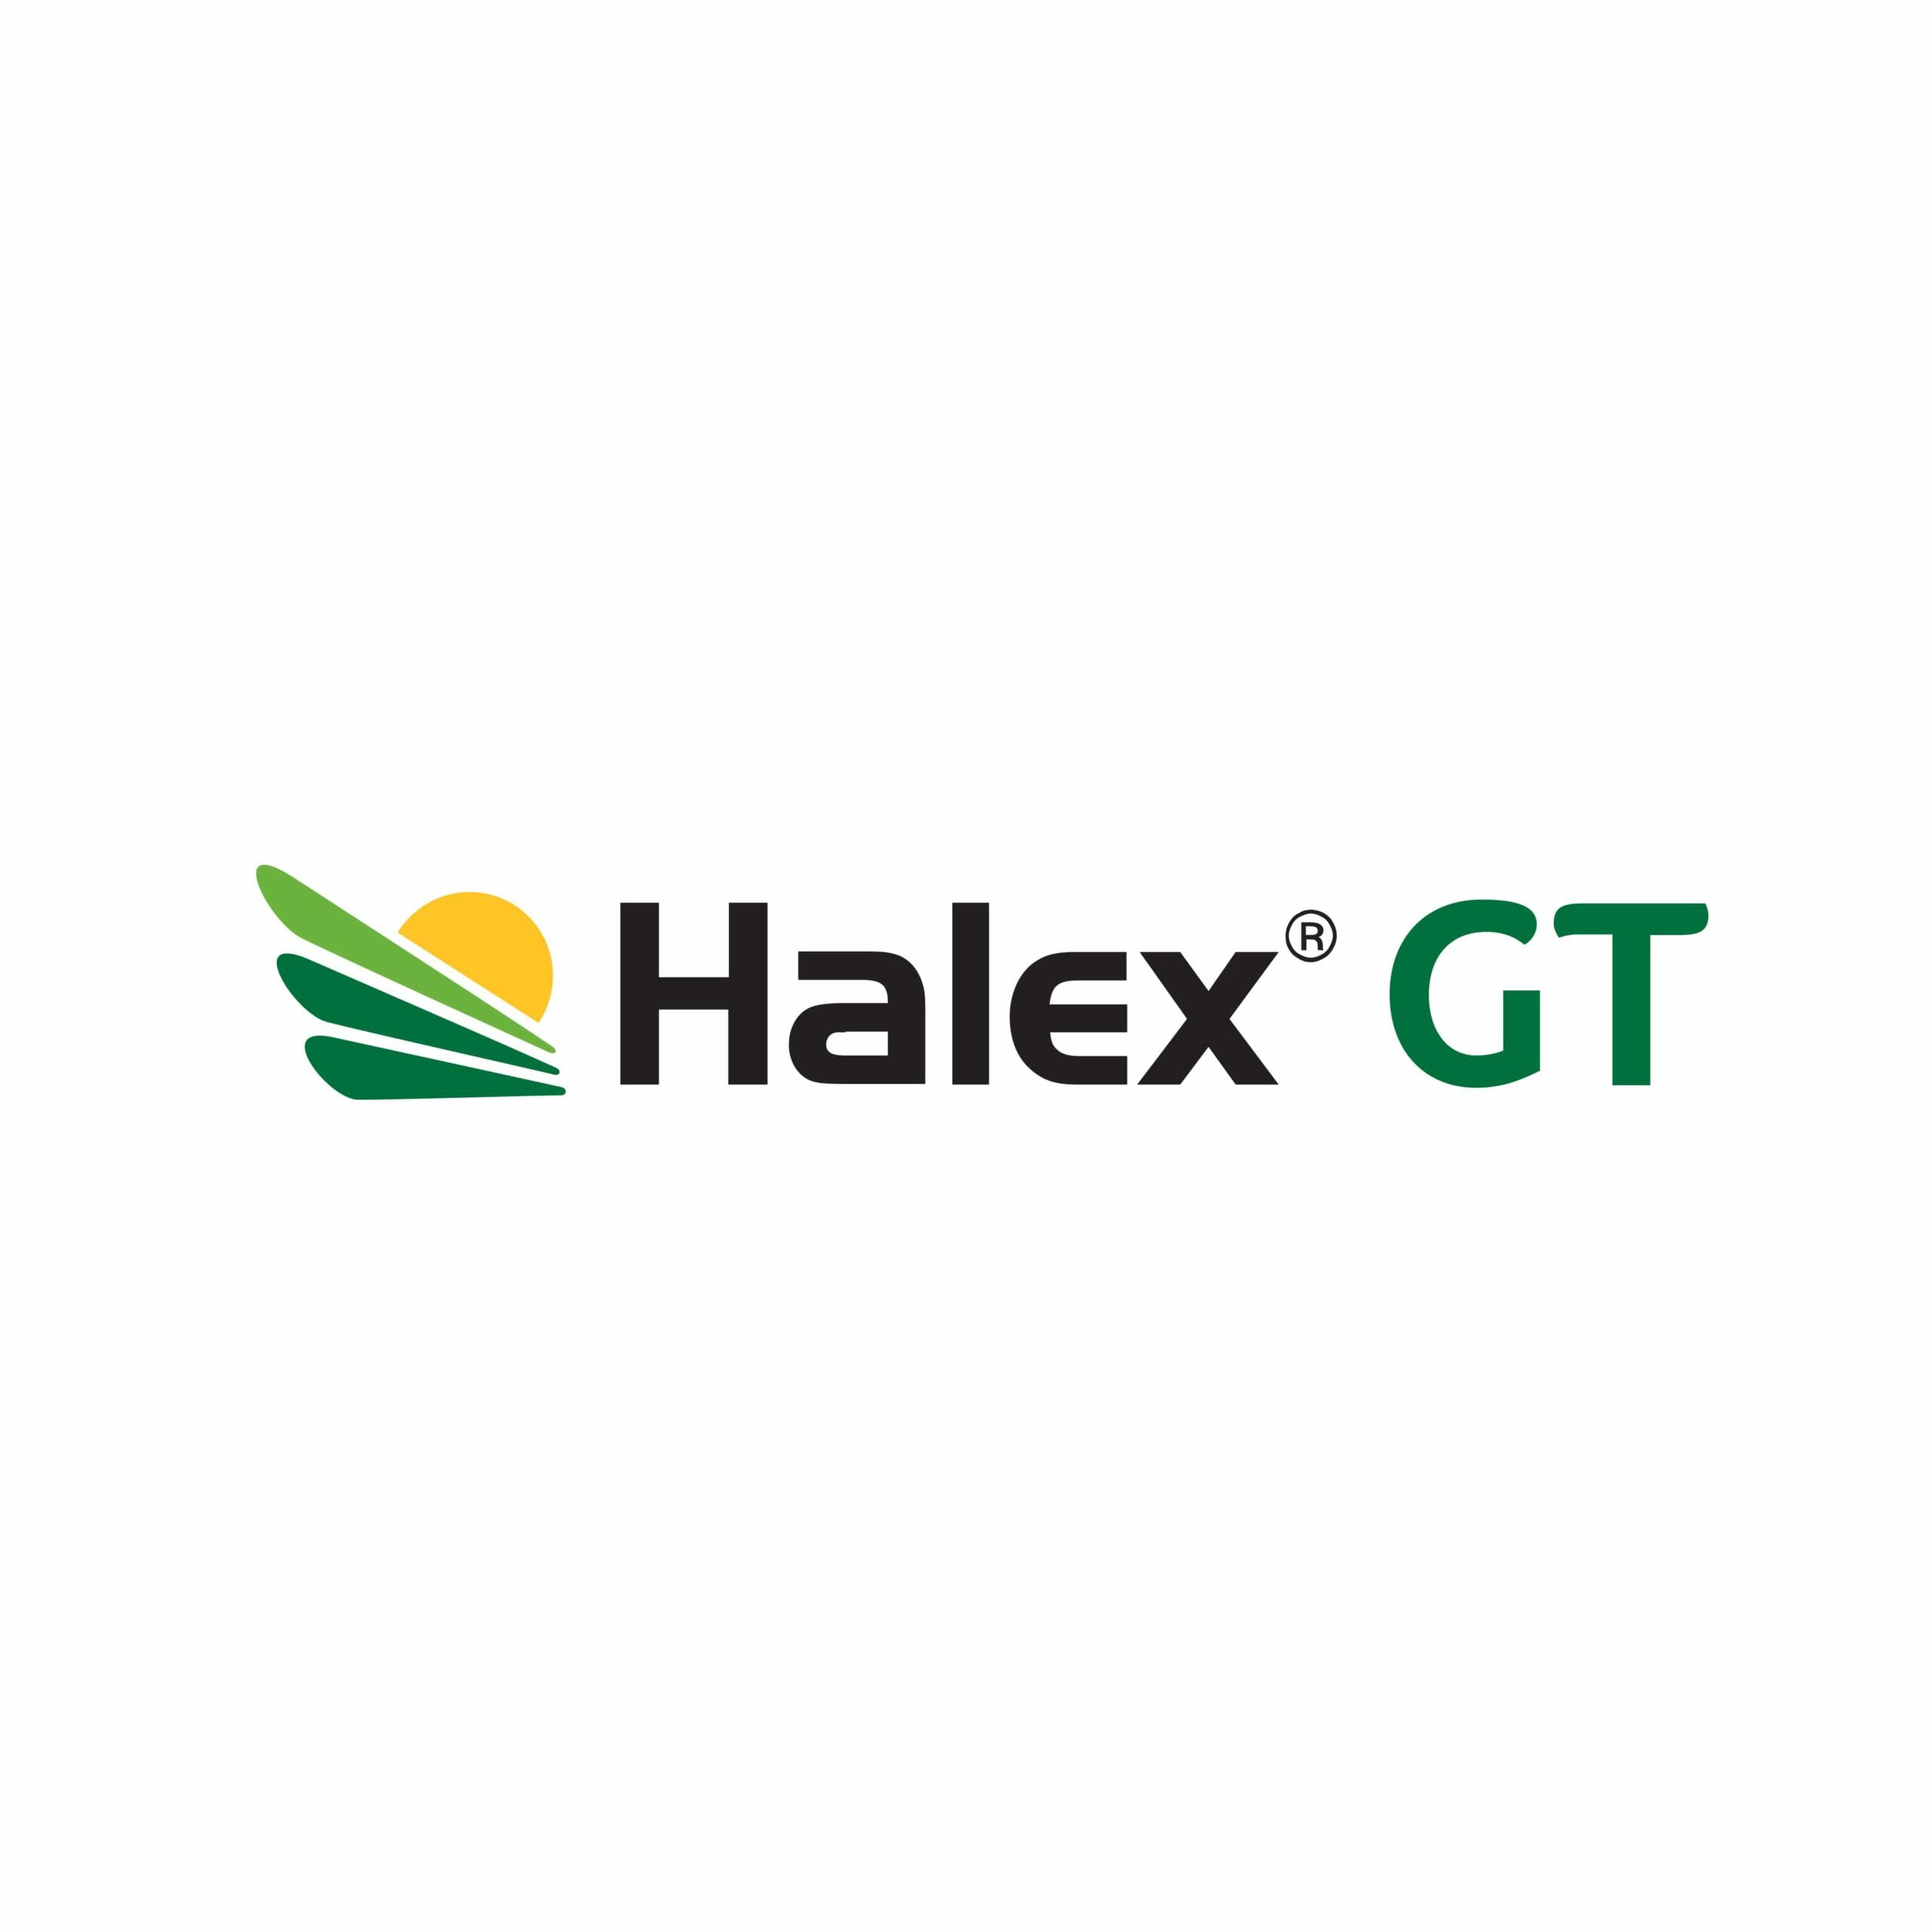 Halex GT